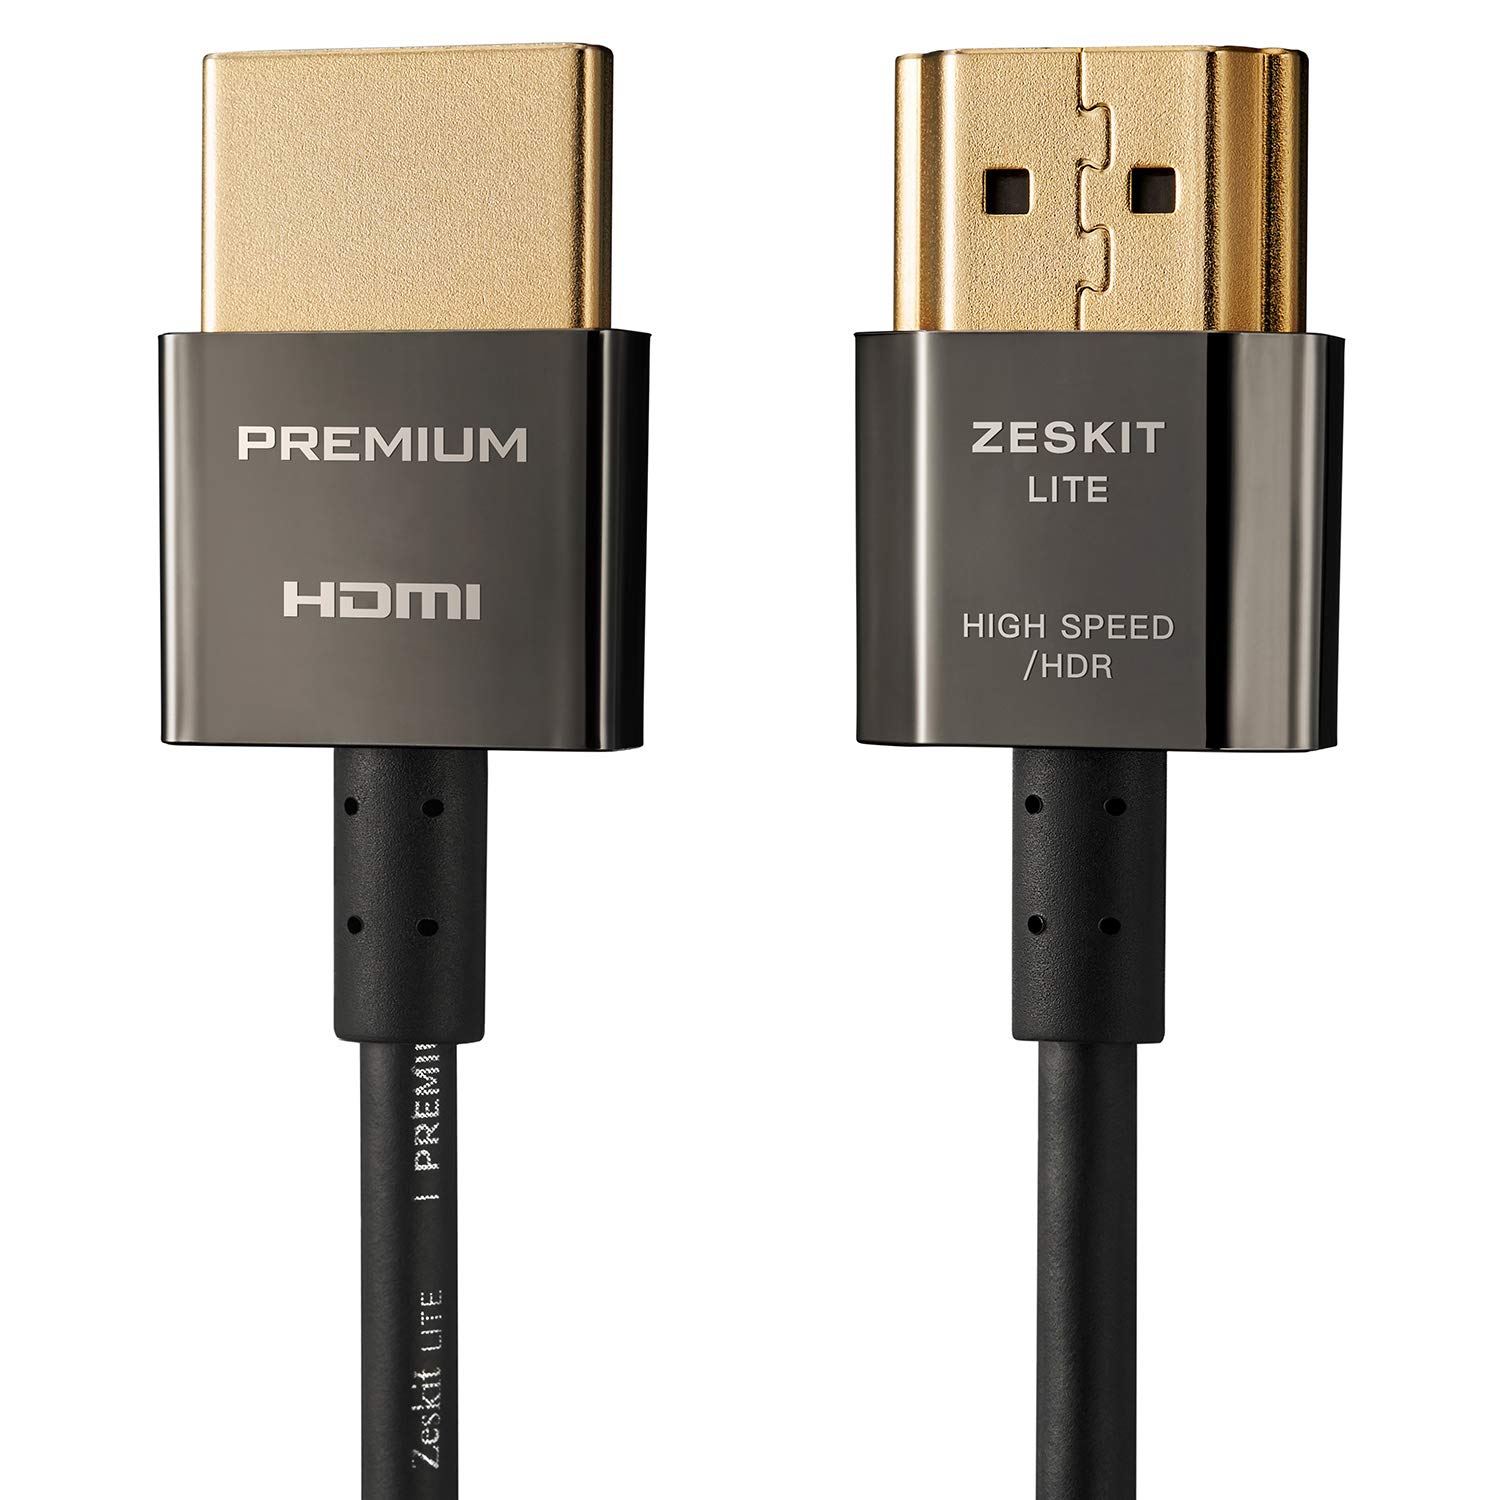 Zeskit Lite 4K Premium HDMI 2.0b High Speed with [...]